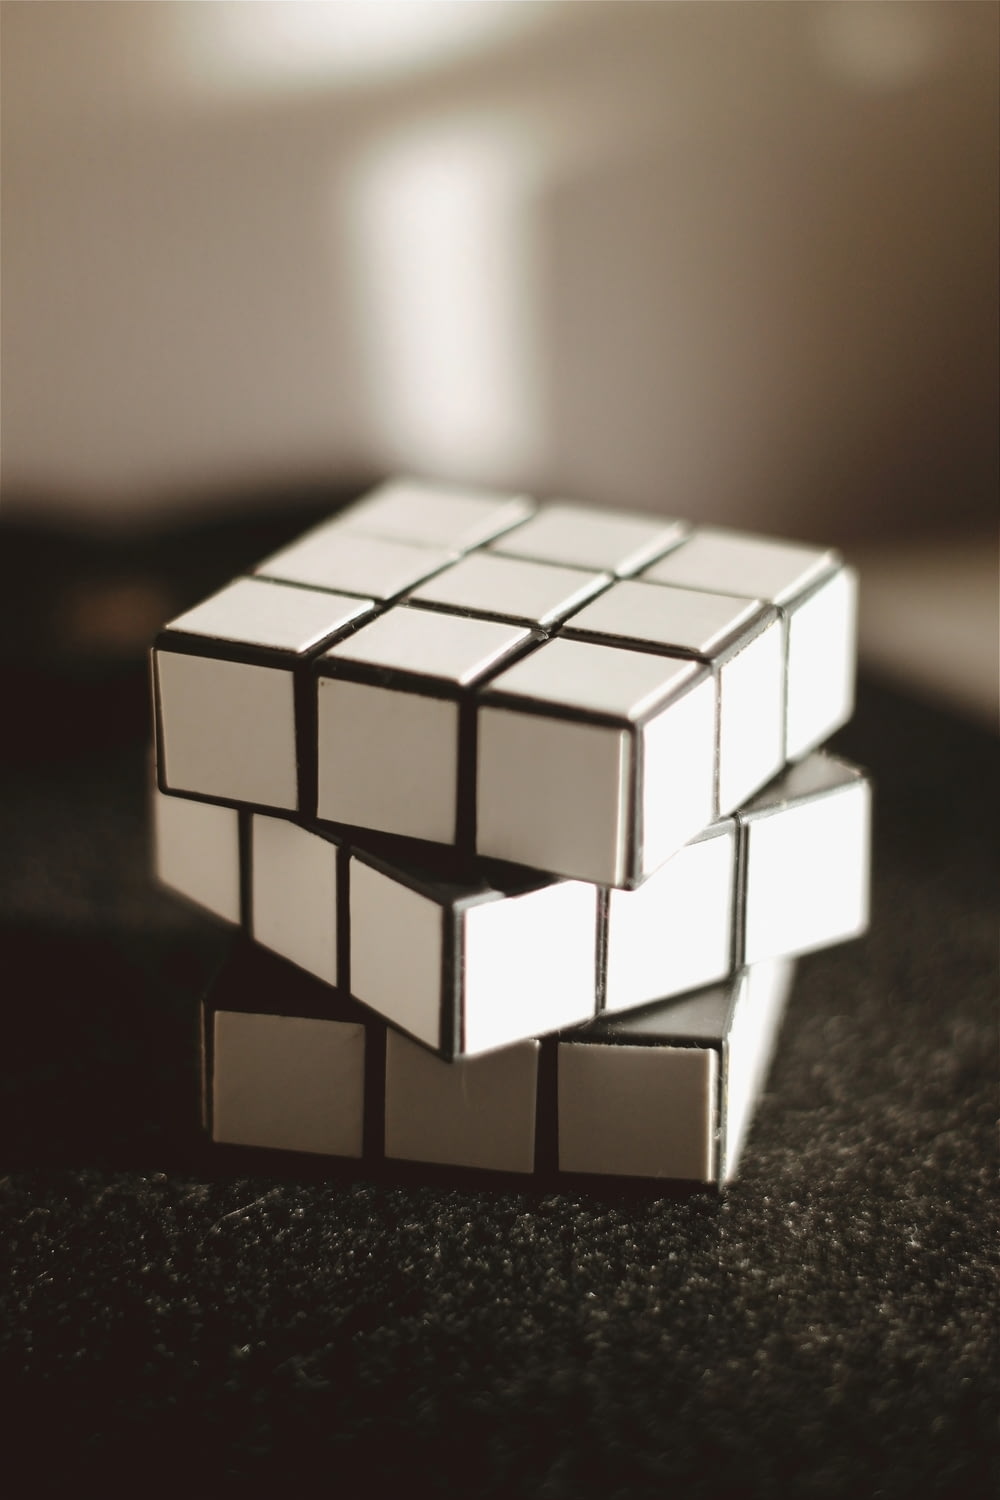 white and black 3 x 3 rubiks cube